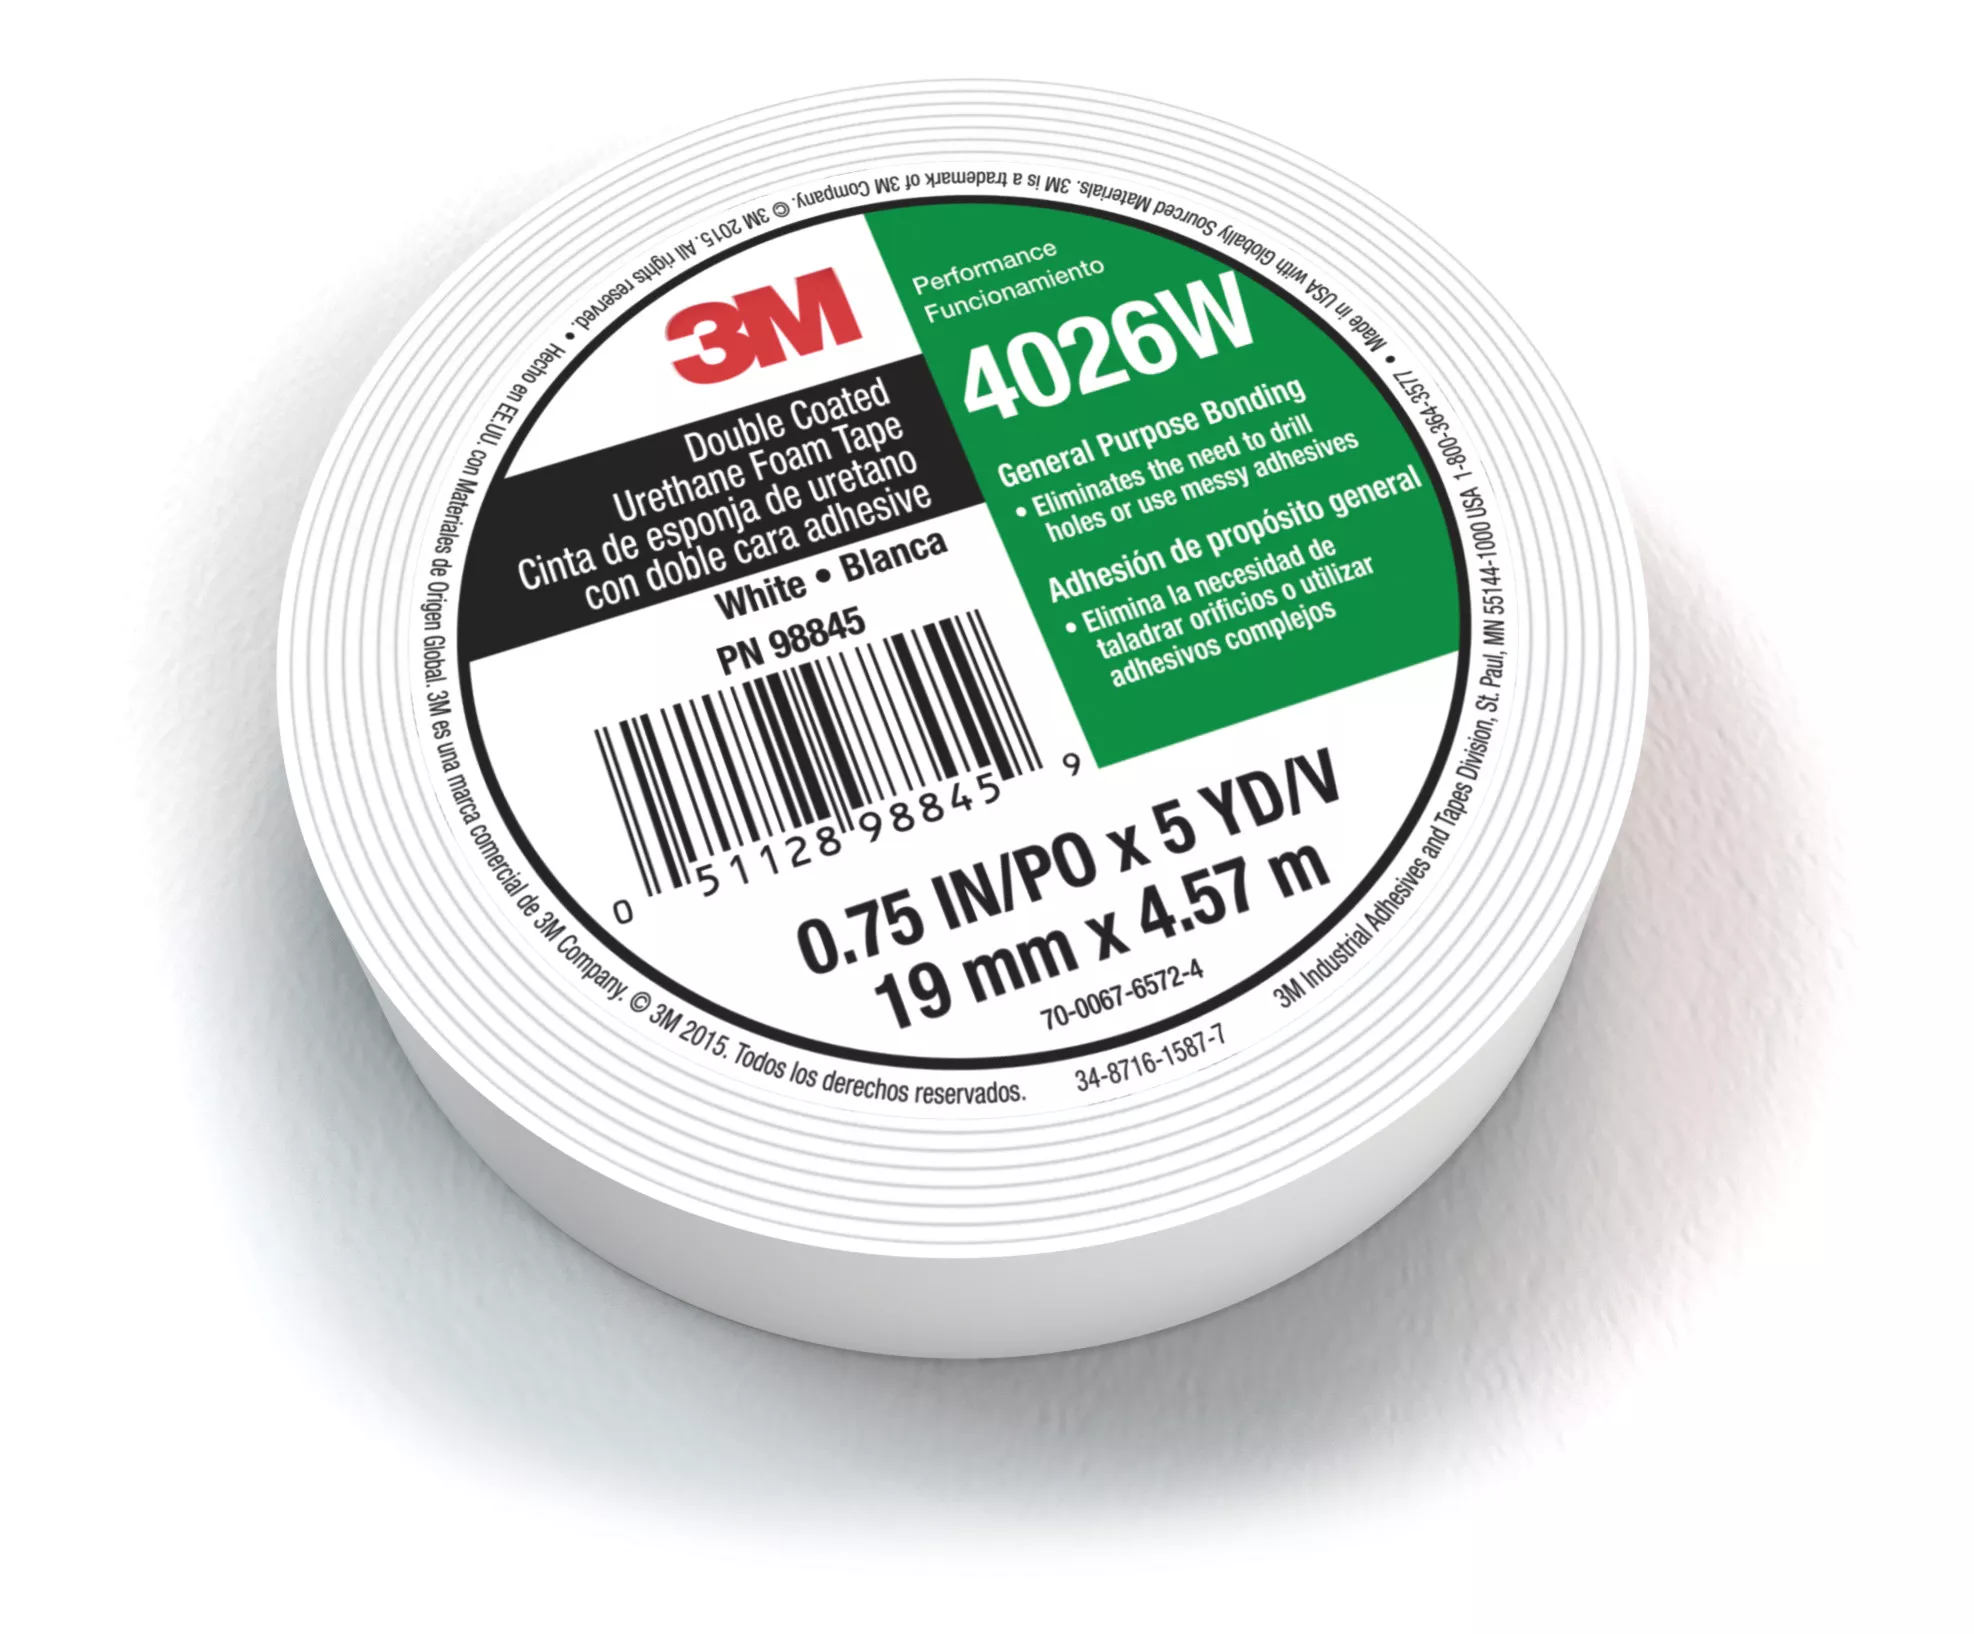 3M™ Double Coated Urethane Foam Tape 4026W, White, 1/2 in x 5 yd, 62
mil, 12 Rolls/Case